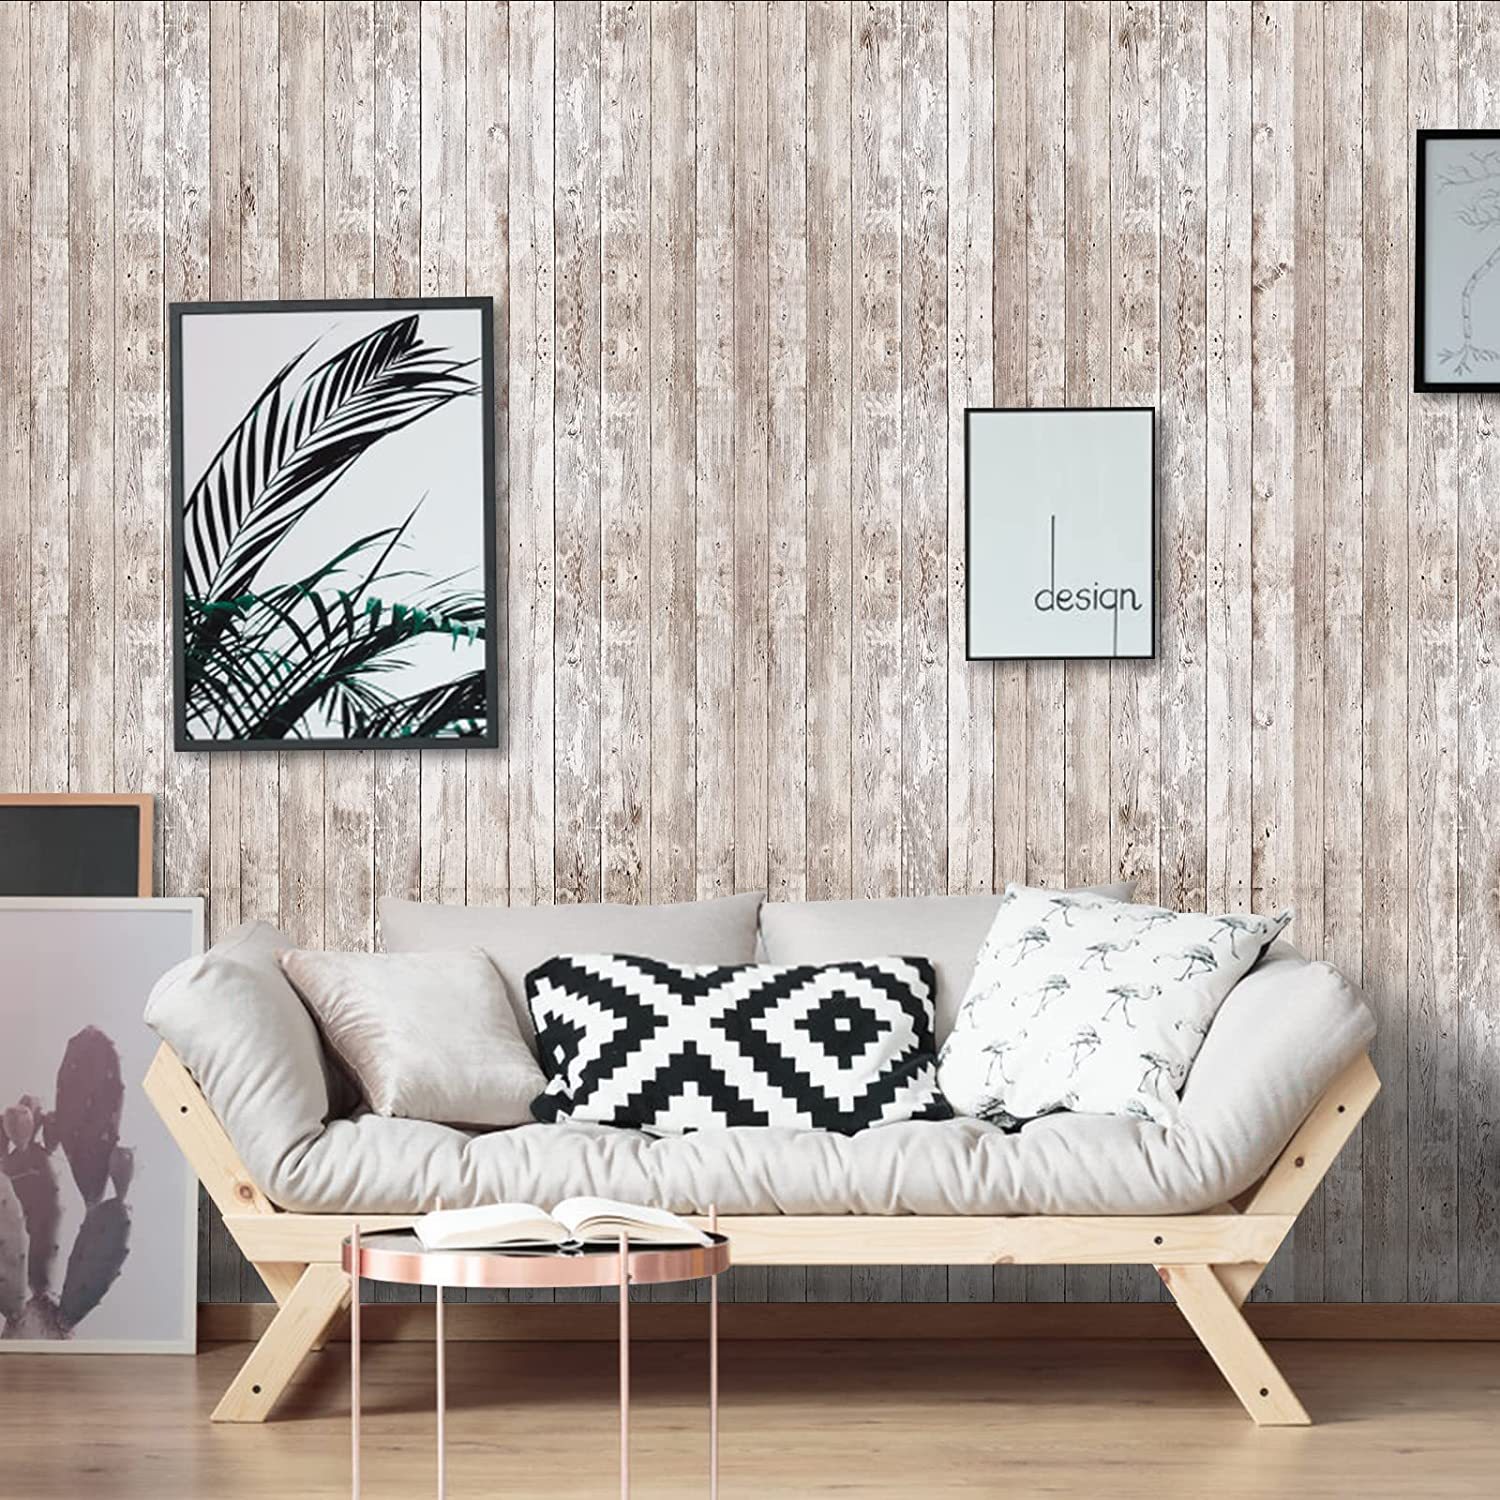 New Retro 3d Vertical Bar Simulation Wood Grain Wood Board Pvc Wall Sticker Wall Decoration Kitchen Living Room Wallpaper Sticker